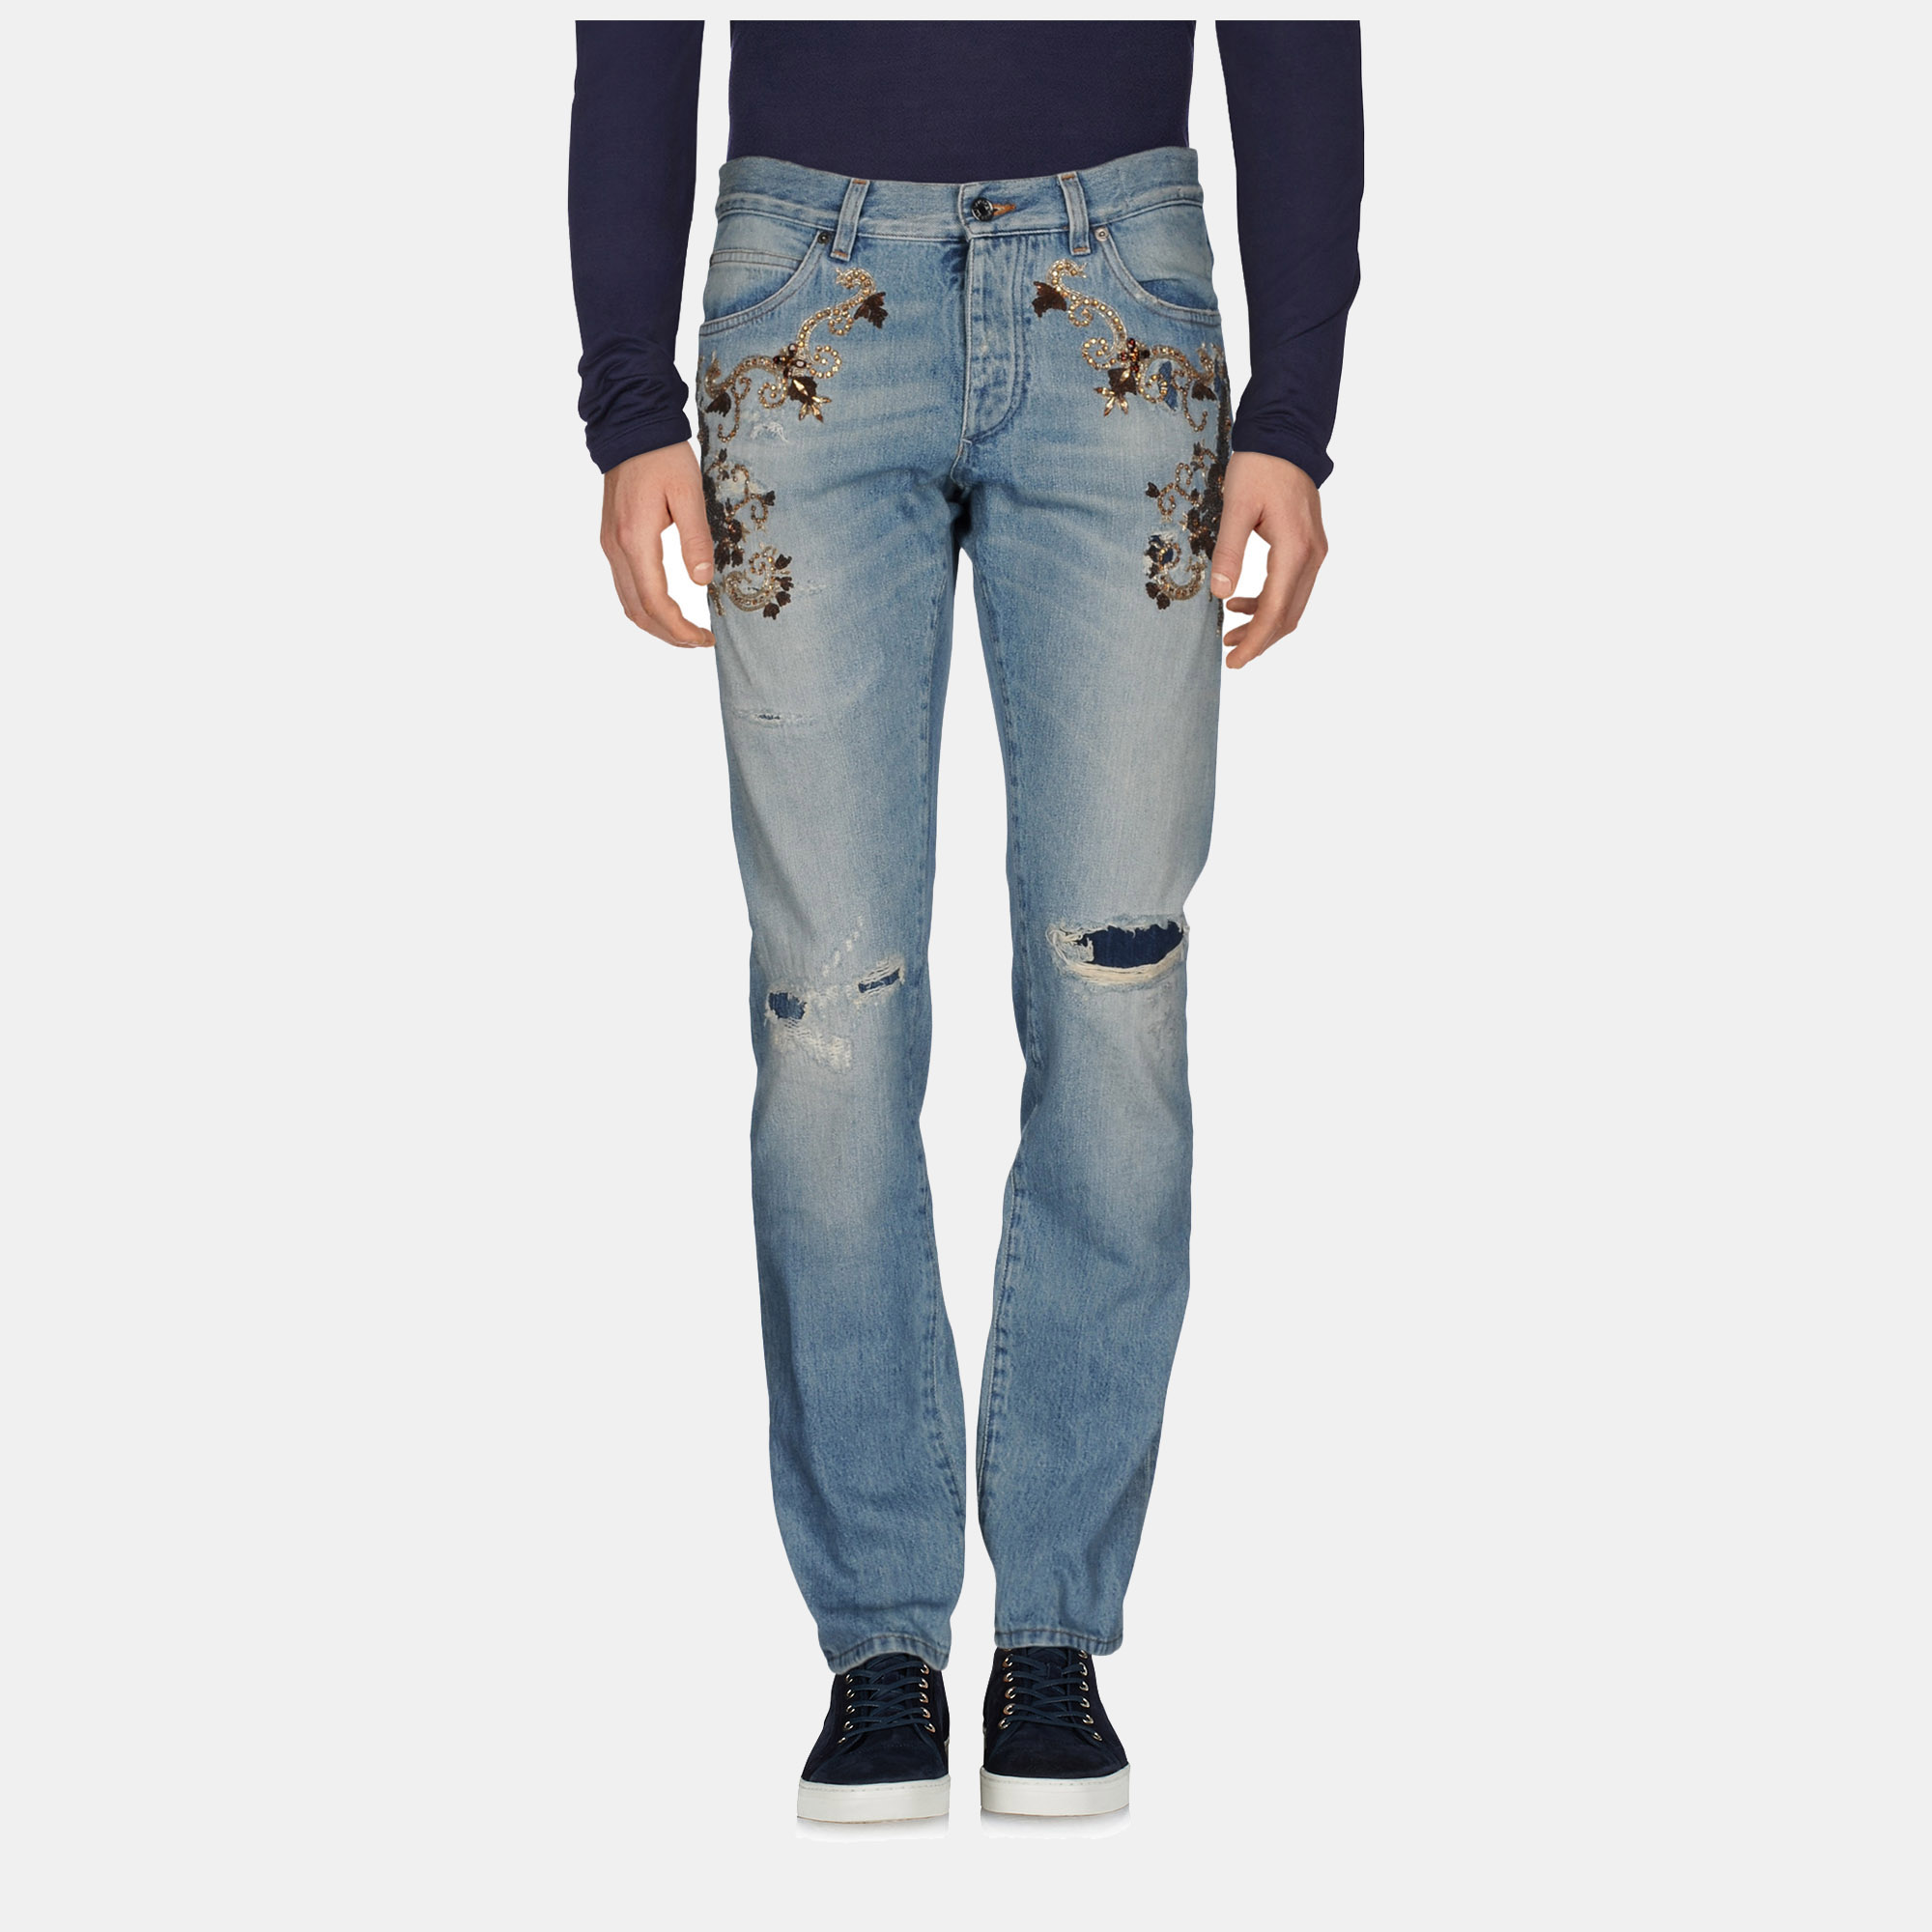 Dolce & gabbana cotton jeans 52